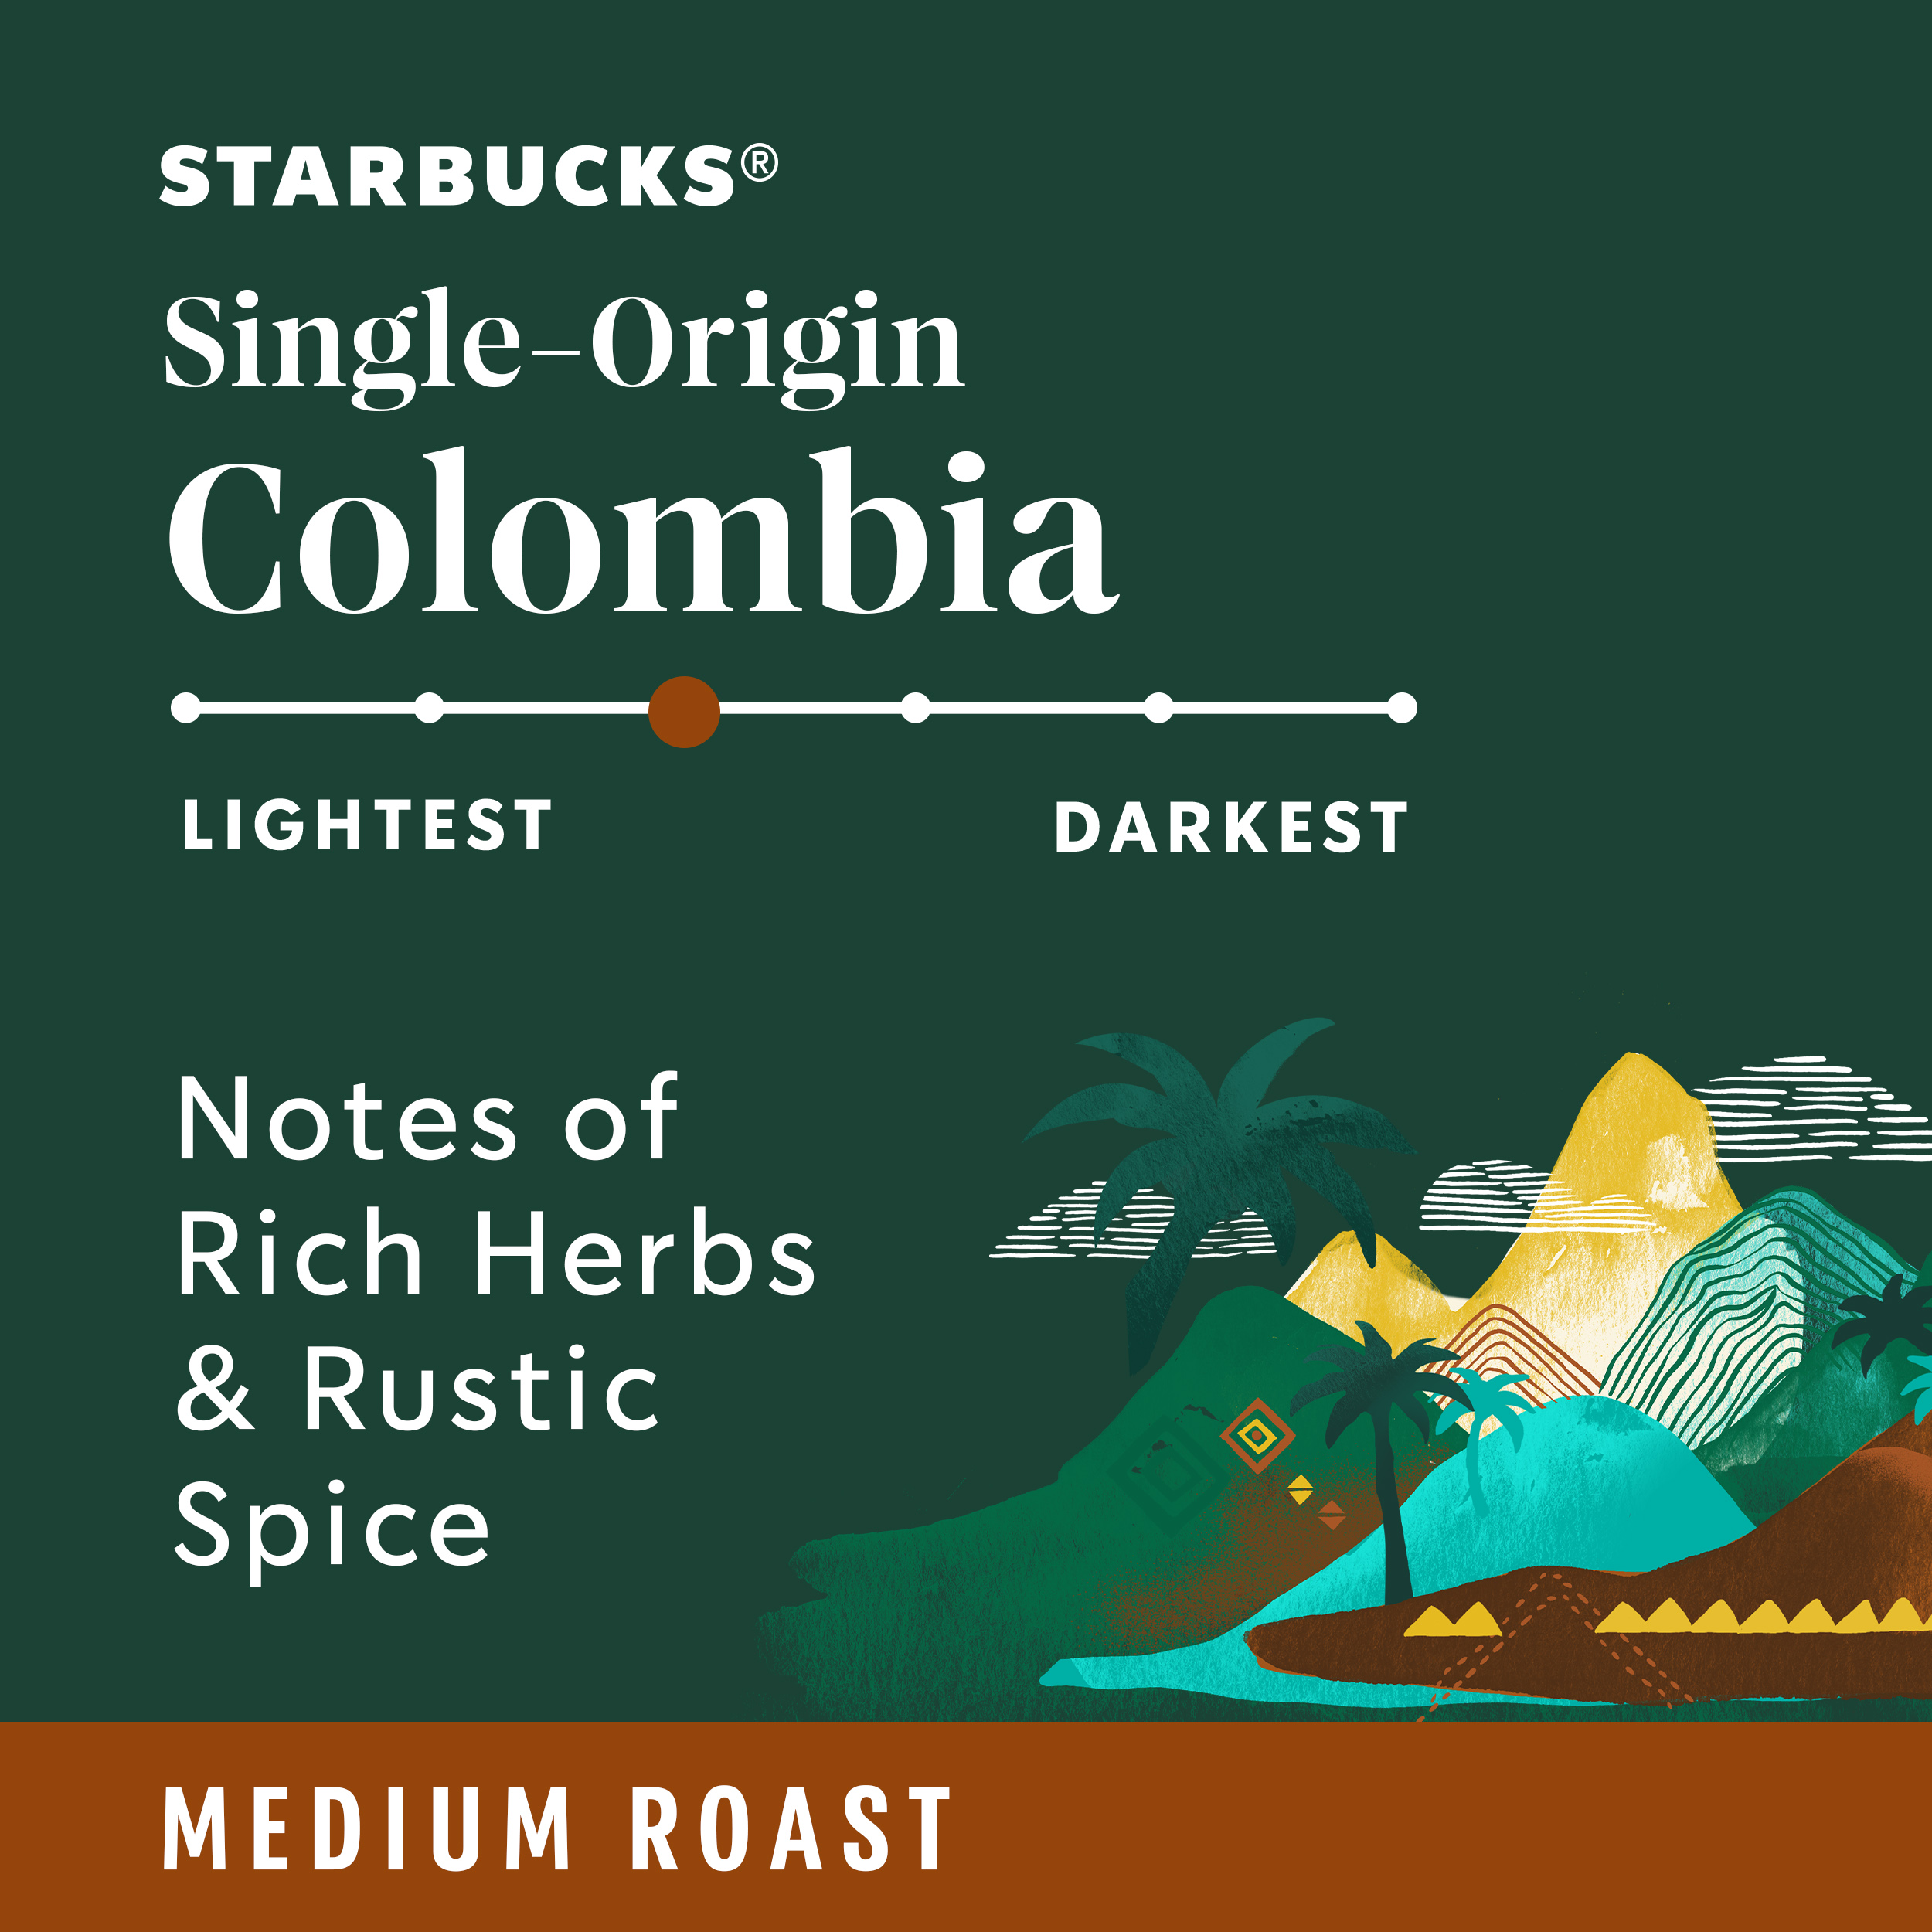 Starbucks Colombia, Ground Coffee, Medium Roast, 7 oz - image 3 of 8